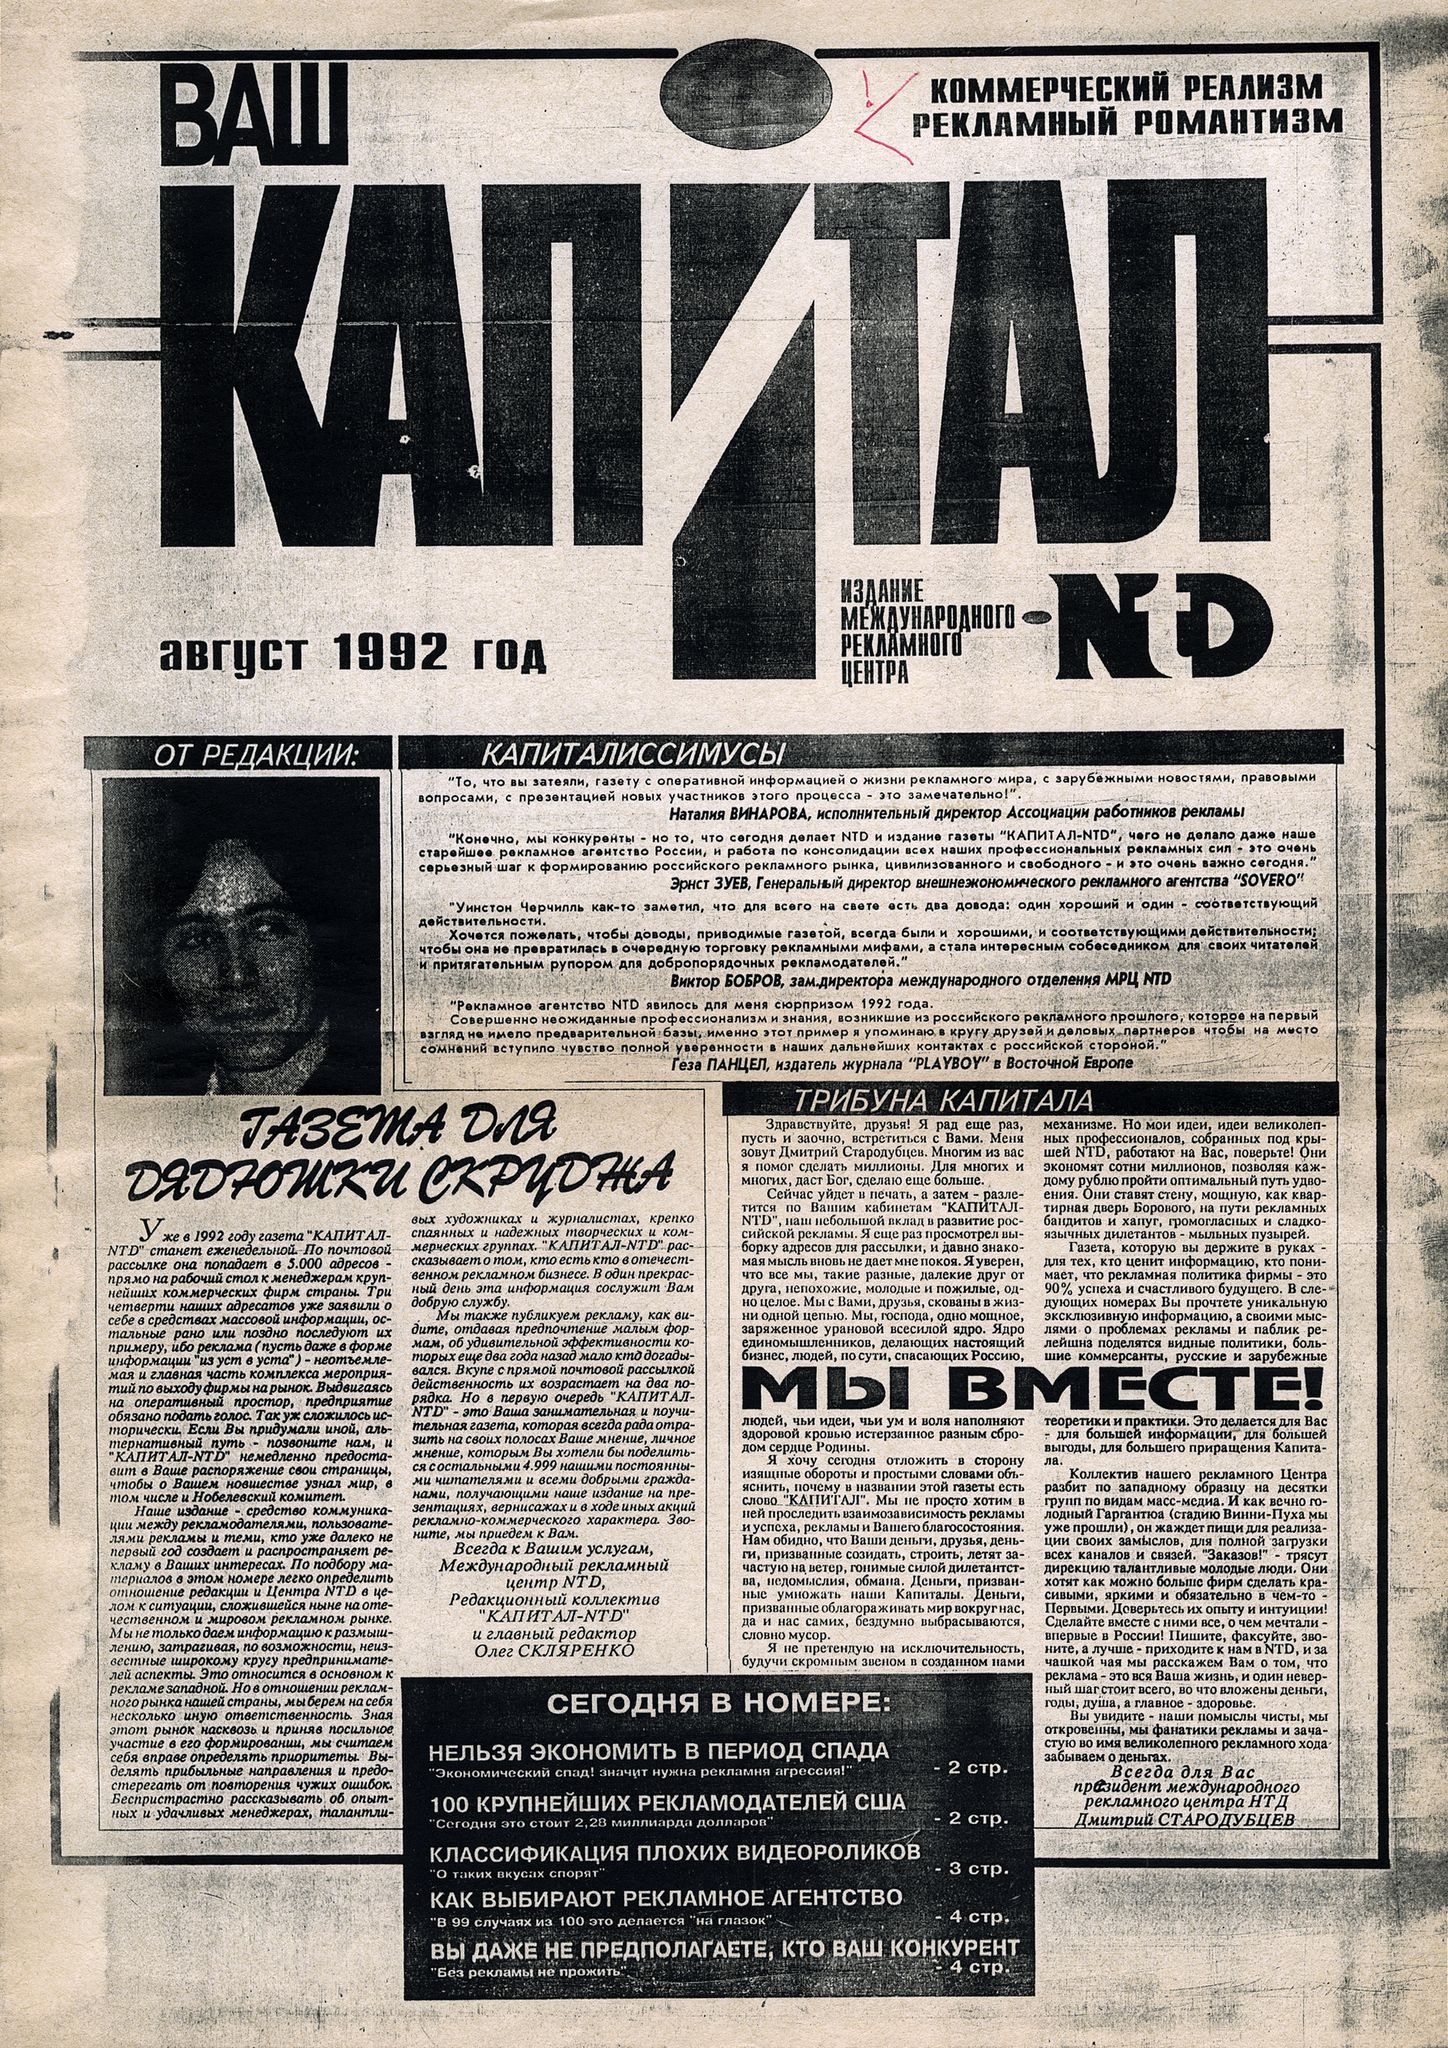 Ваш Капитал (Your Capital, August 1992)